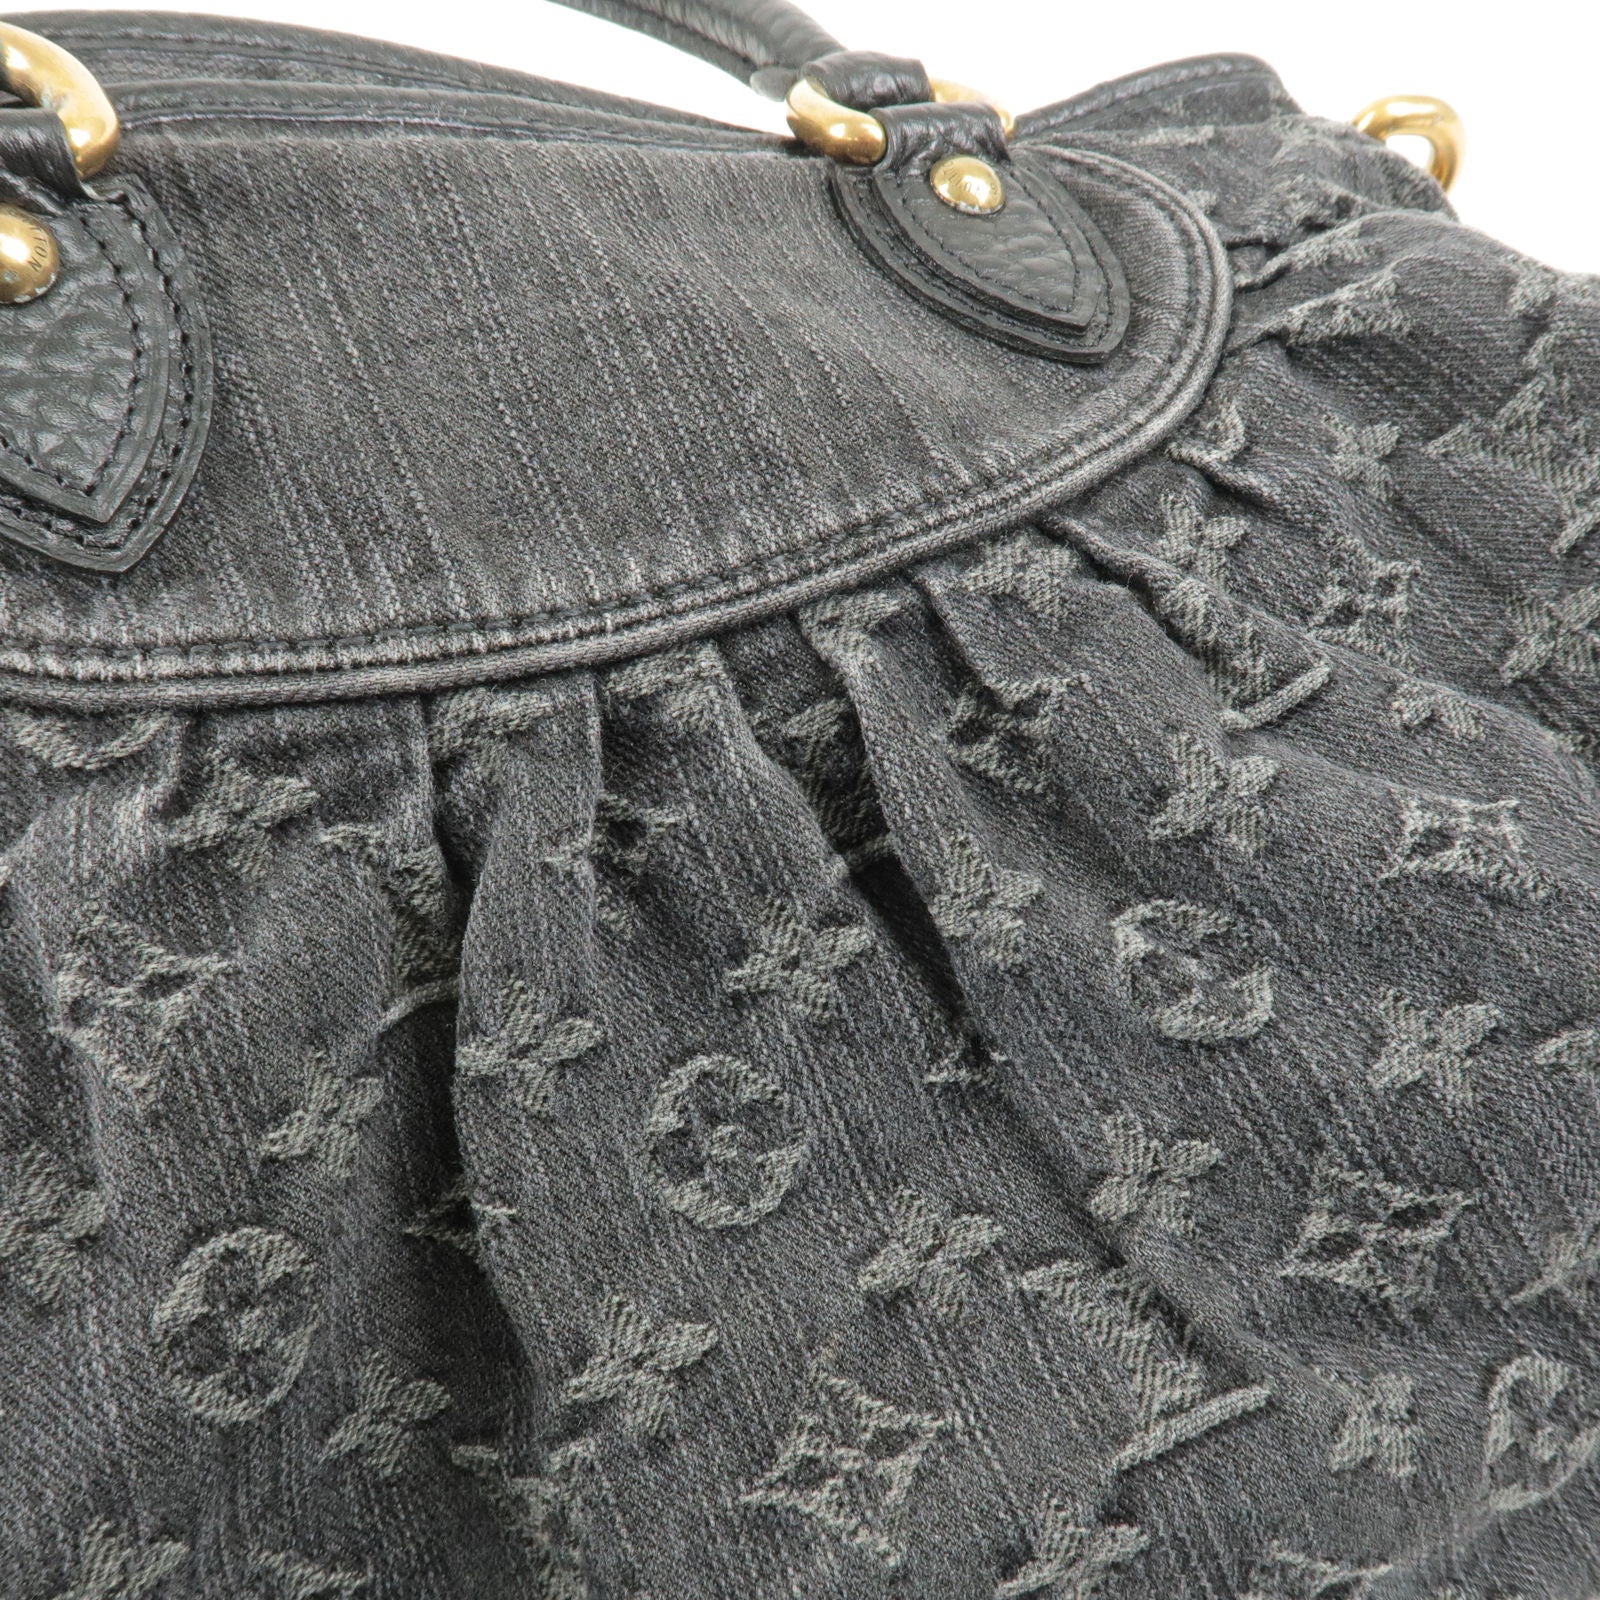 Louis Vuitton Black Monogram Denim Neo Cabby GM Bag Louis Vuitton